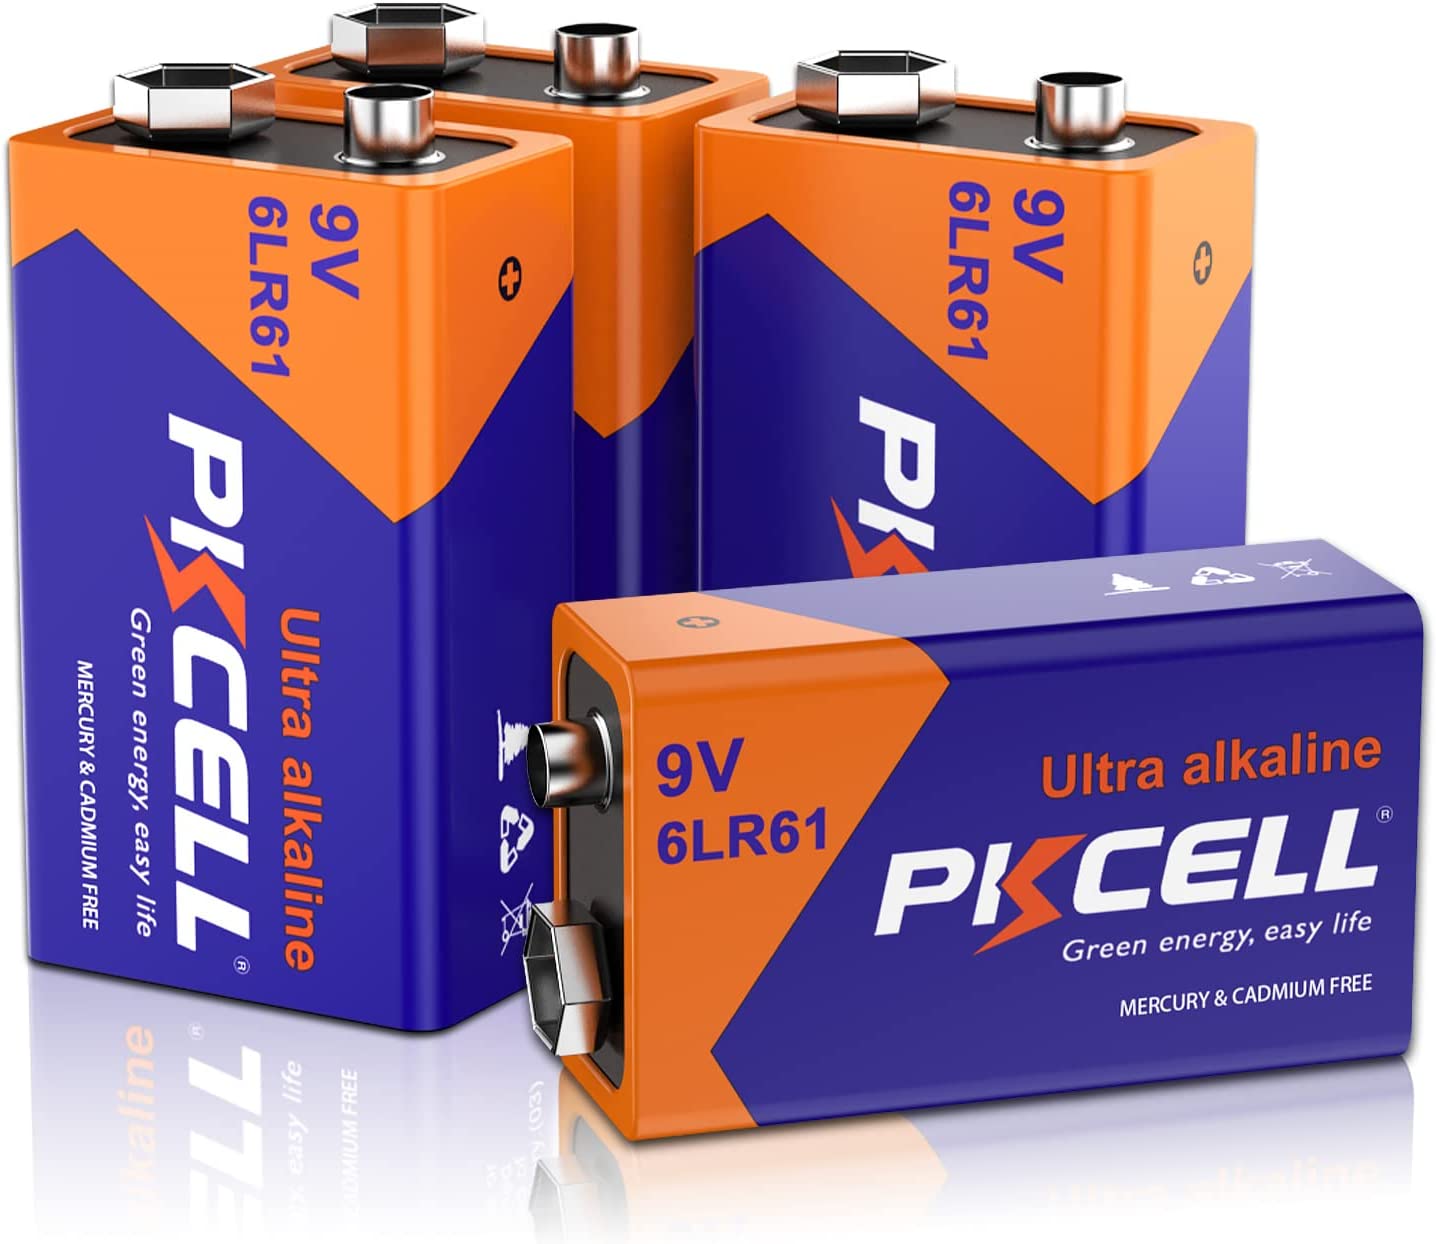 9V Batteries 9V 6LR61 Battery 9 Volt Battery Alkaline Battery Disposable Batteries